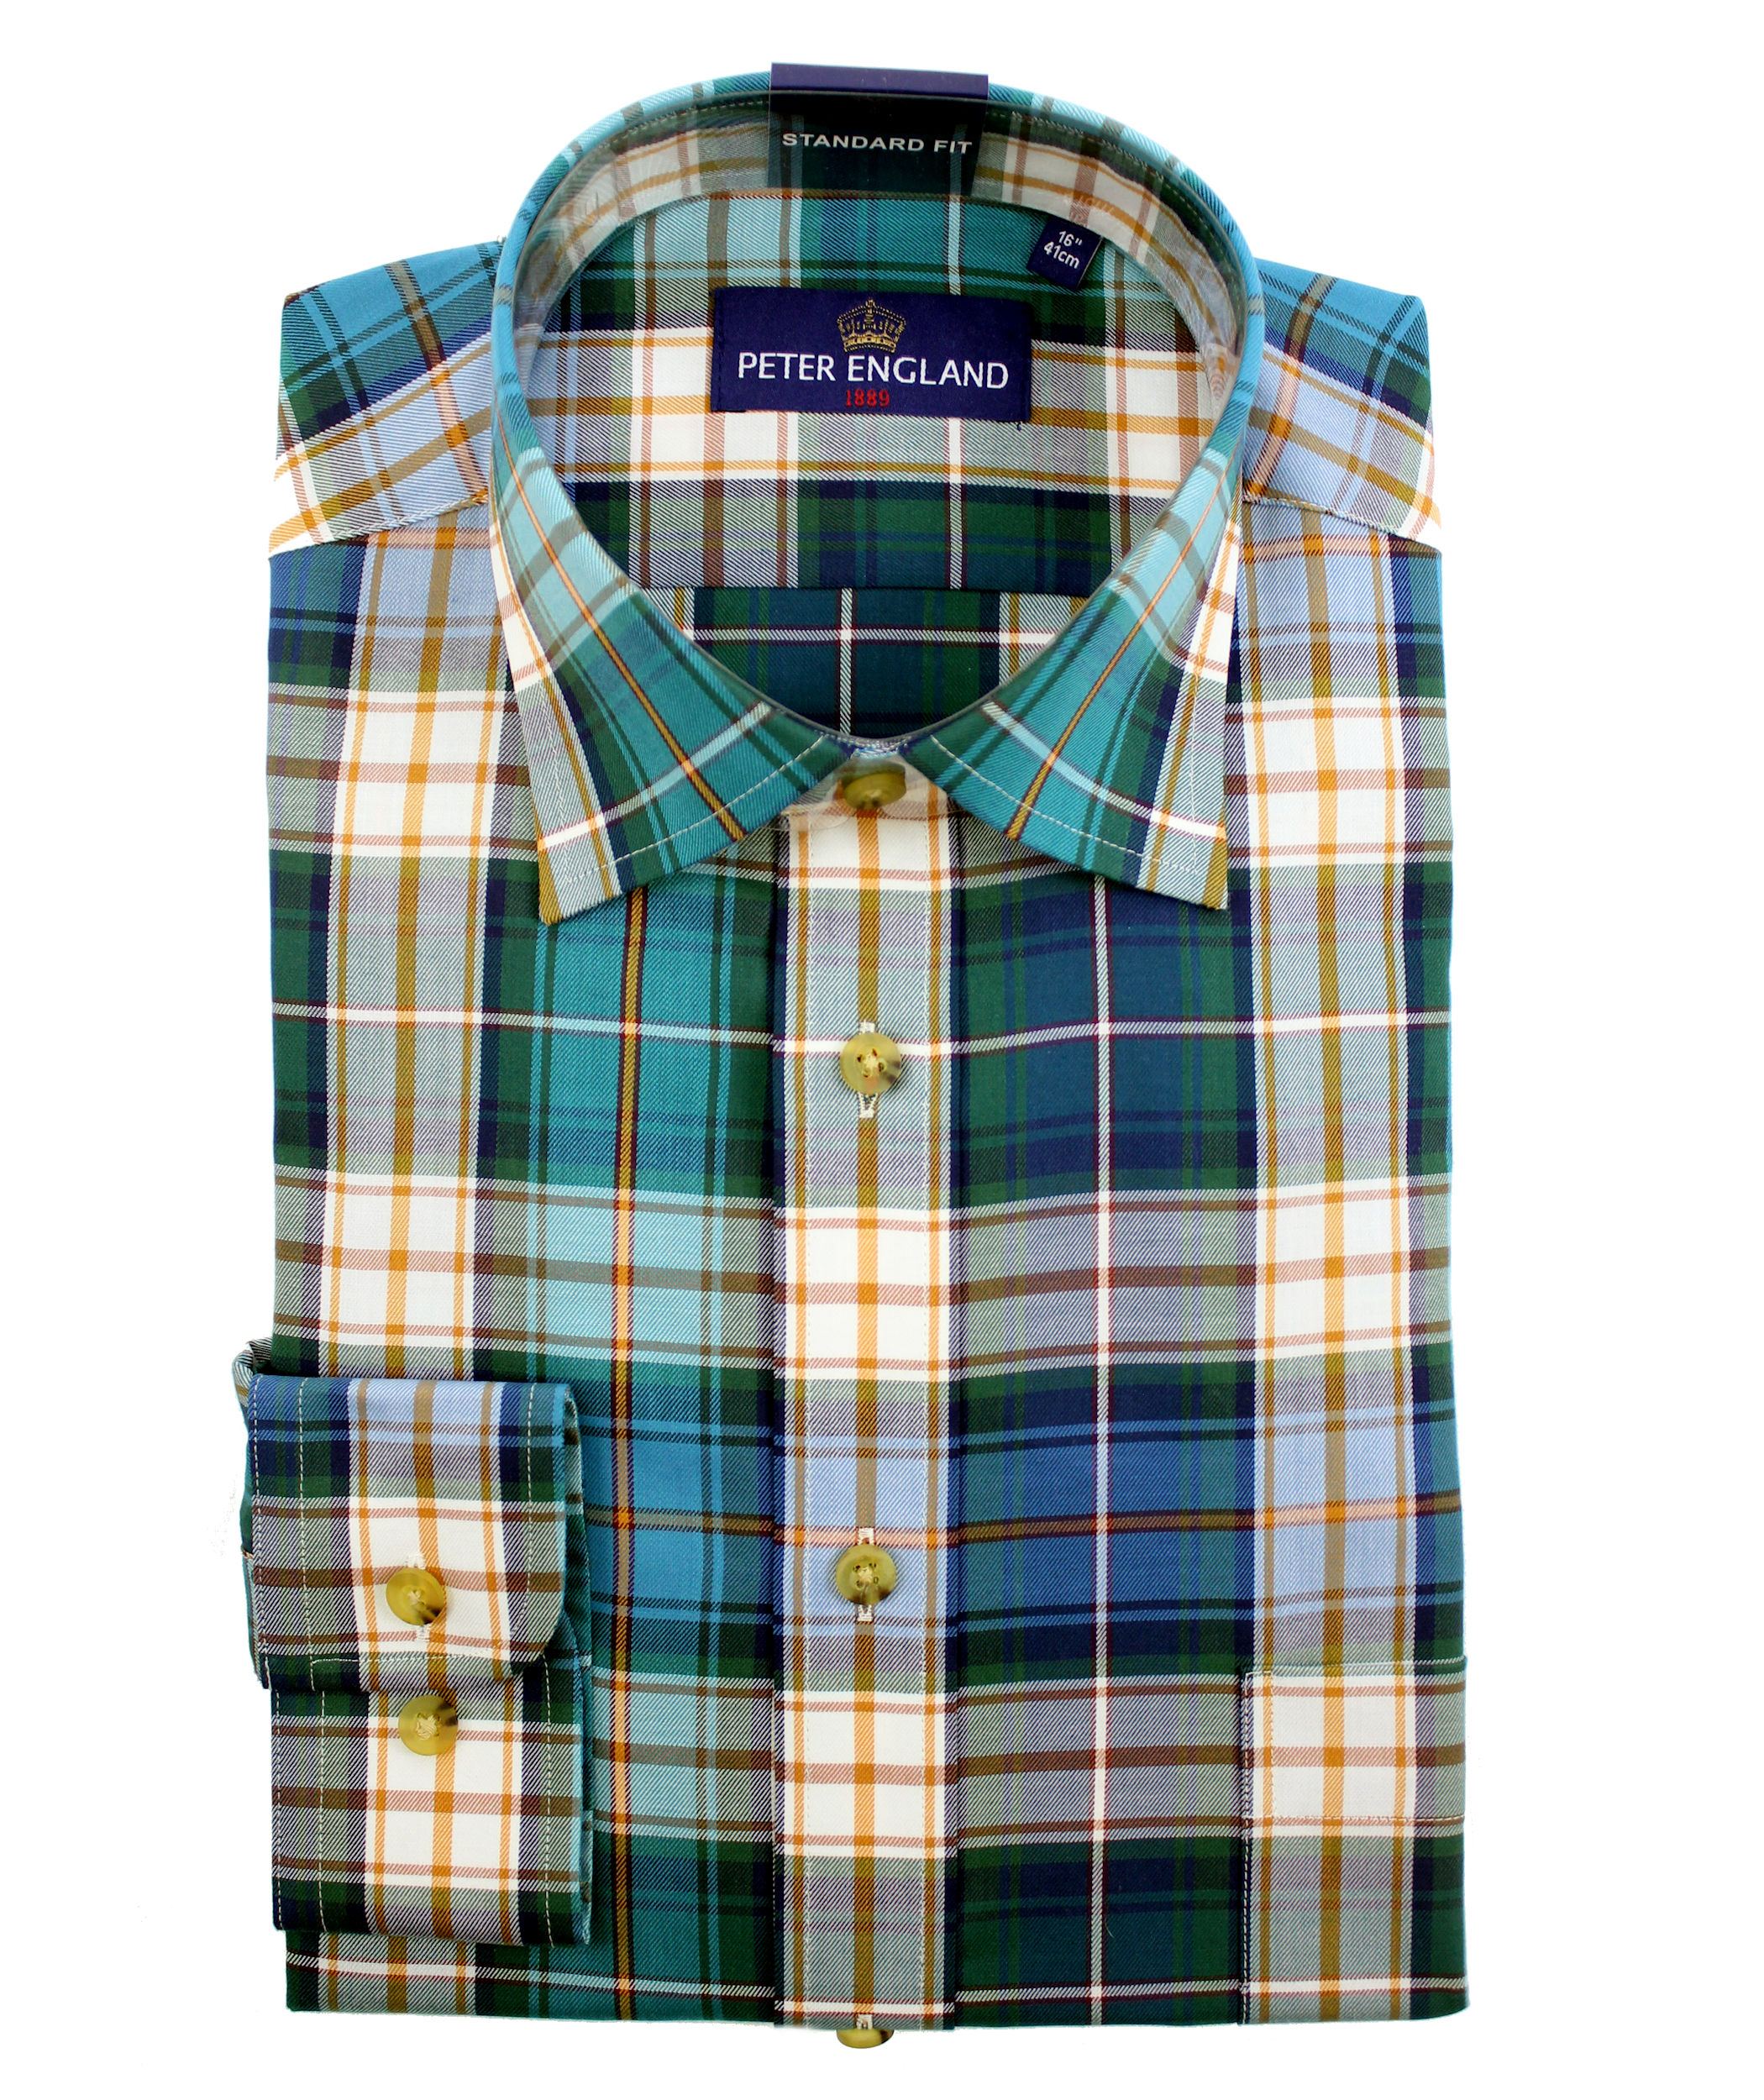 Peter England Green Plaid Shirt - Peter England